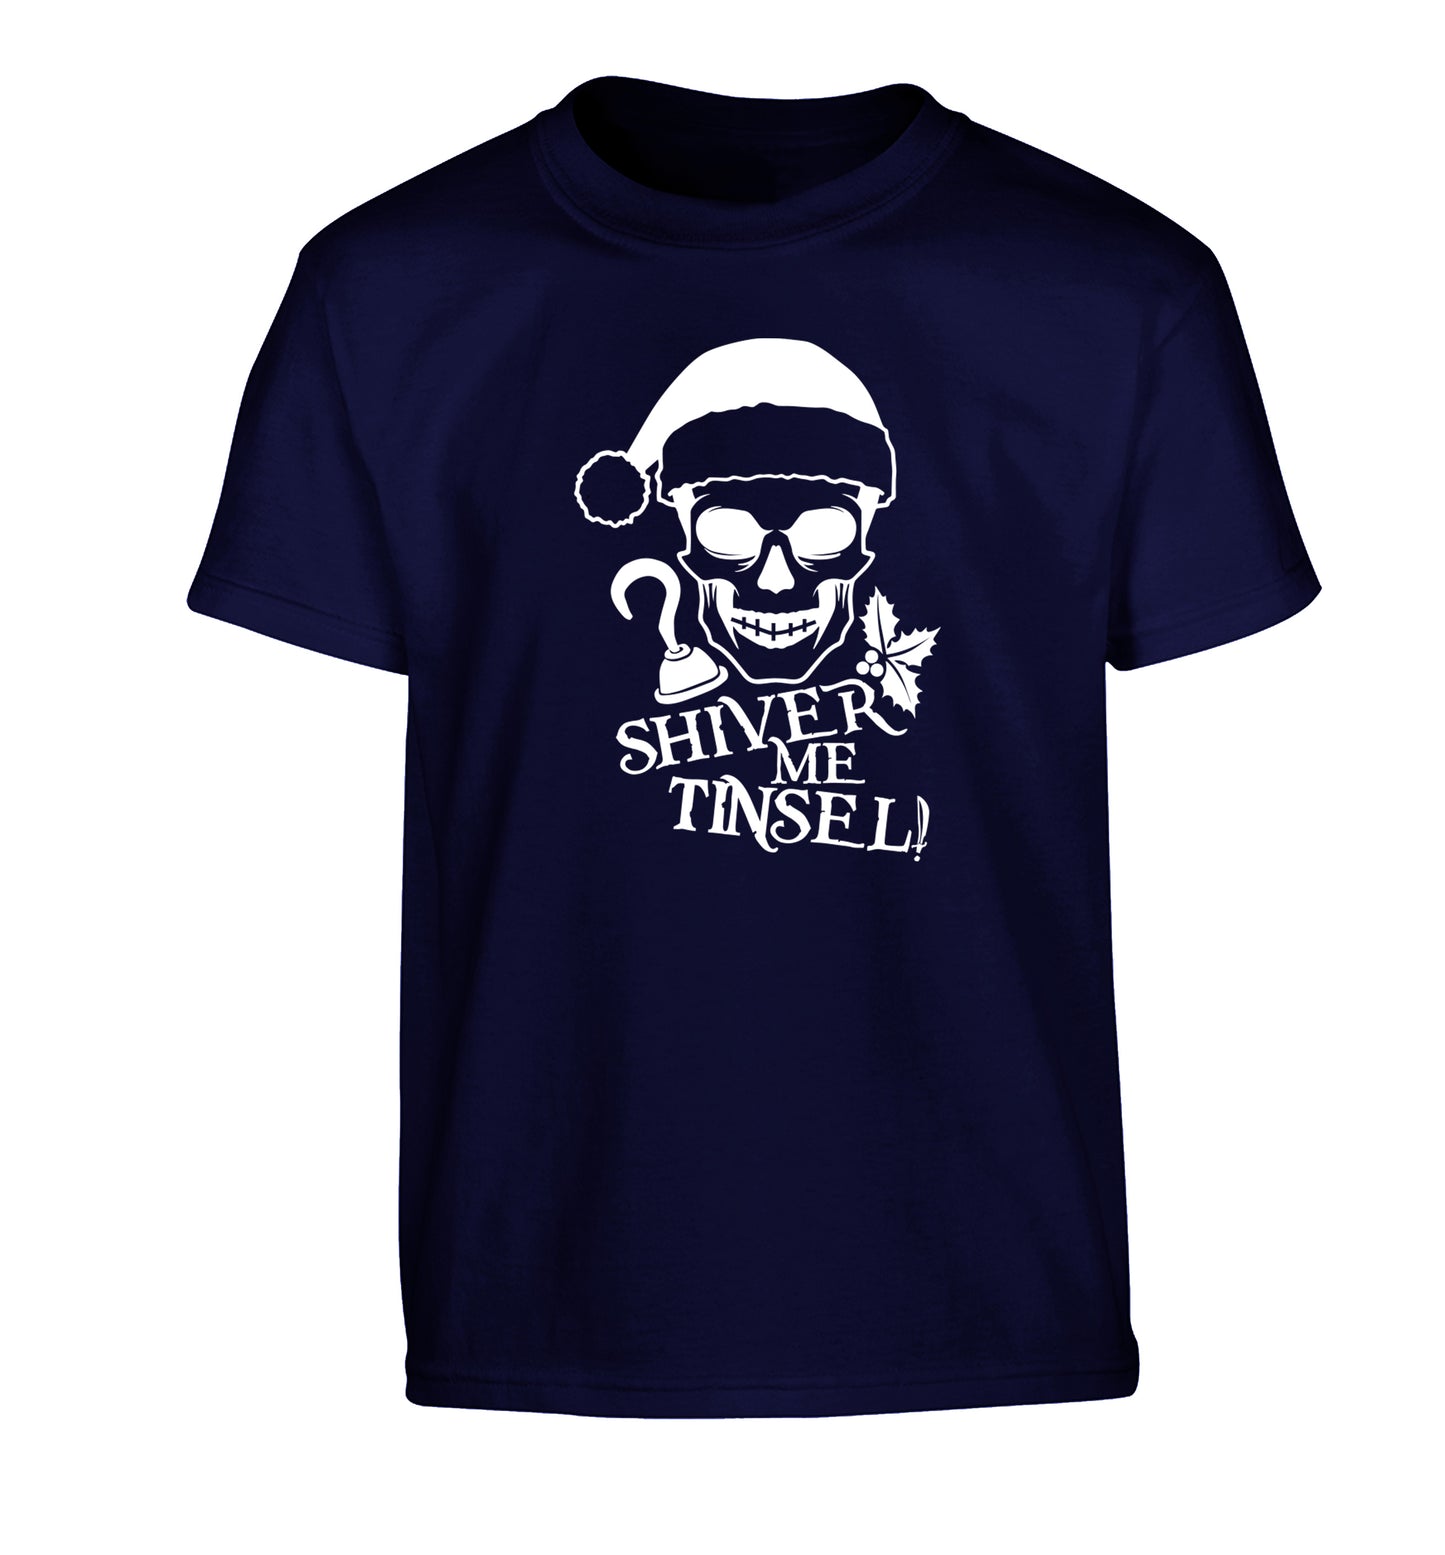 Shiver me tinsel Children's navy Tshirt 12-14 Years